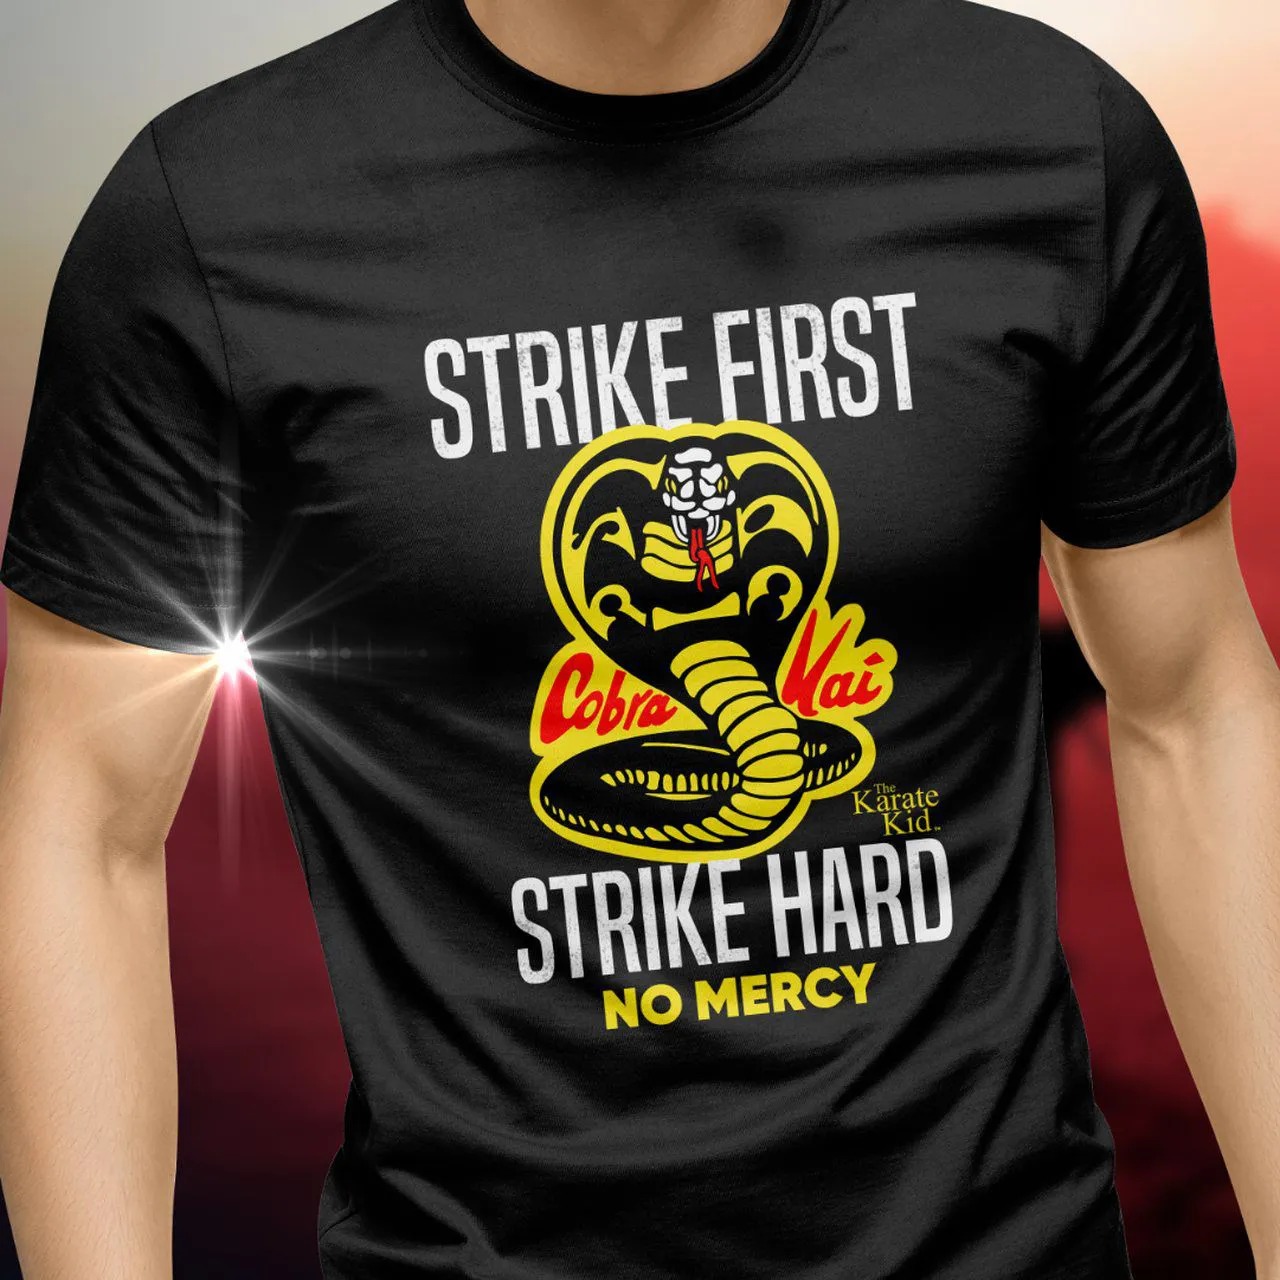 Camiseta Unissex Cobra Kai (Strike First Strike Hard): The Karate Kid (Cobra Kai) Camisa Geek